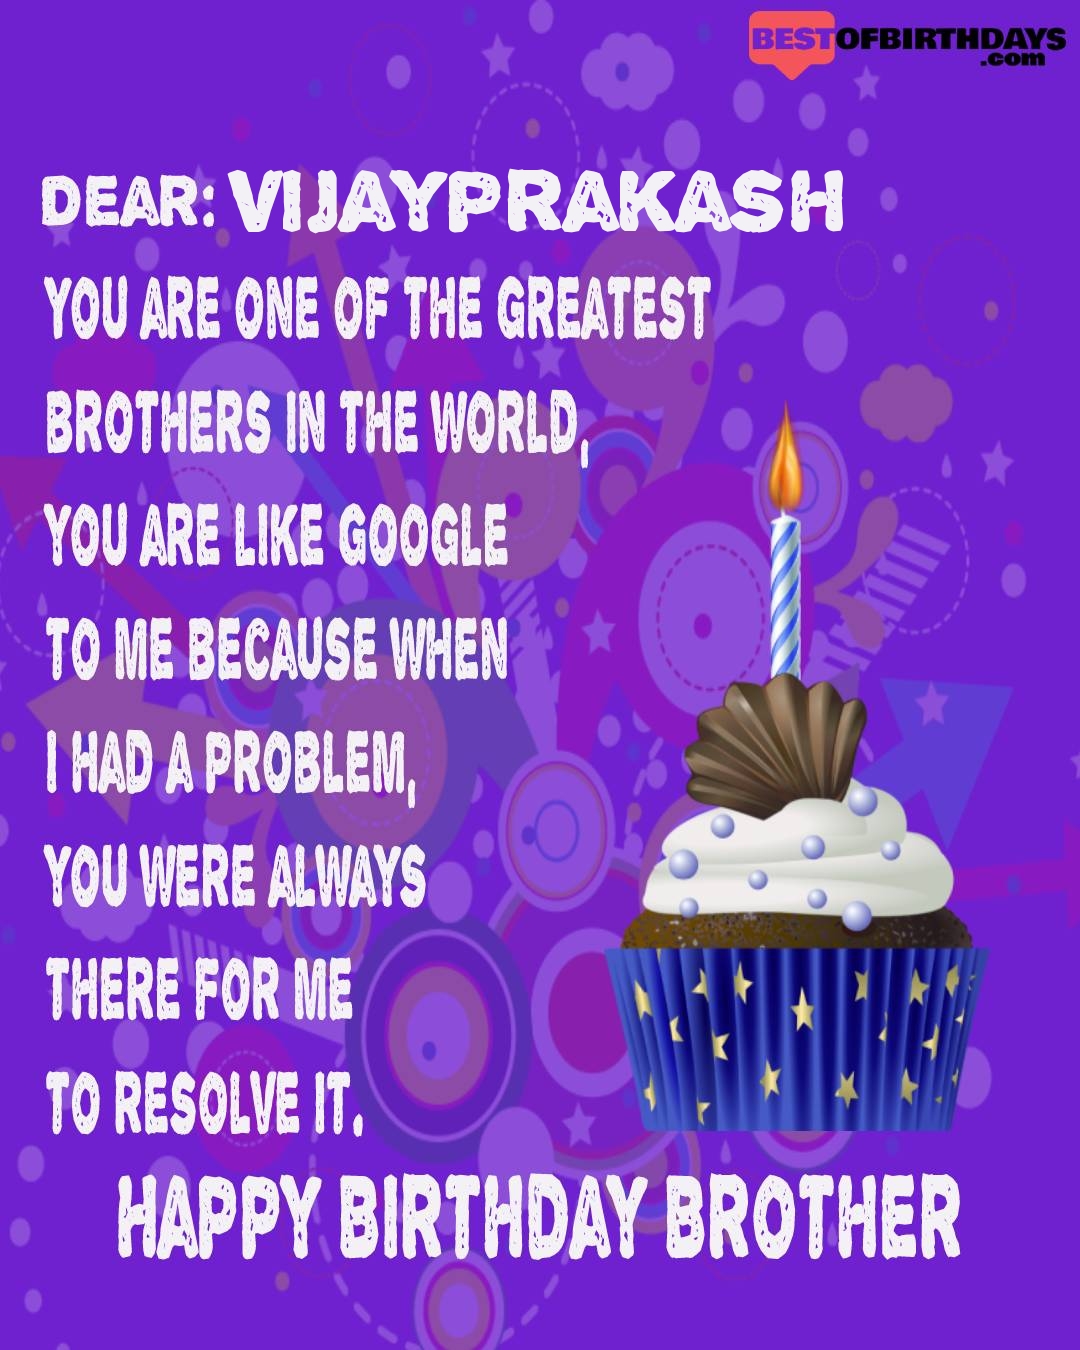 Happy birthday vijayprakash bhai brother bro